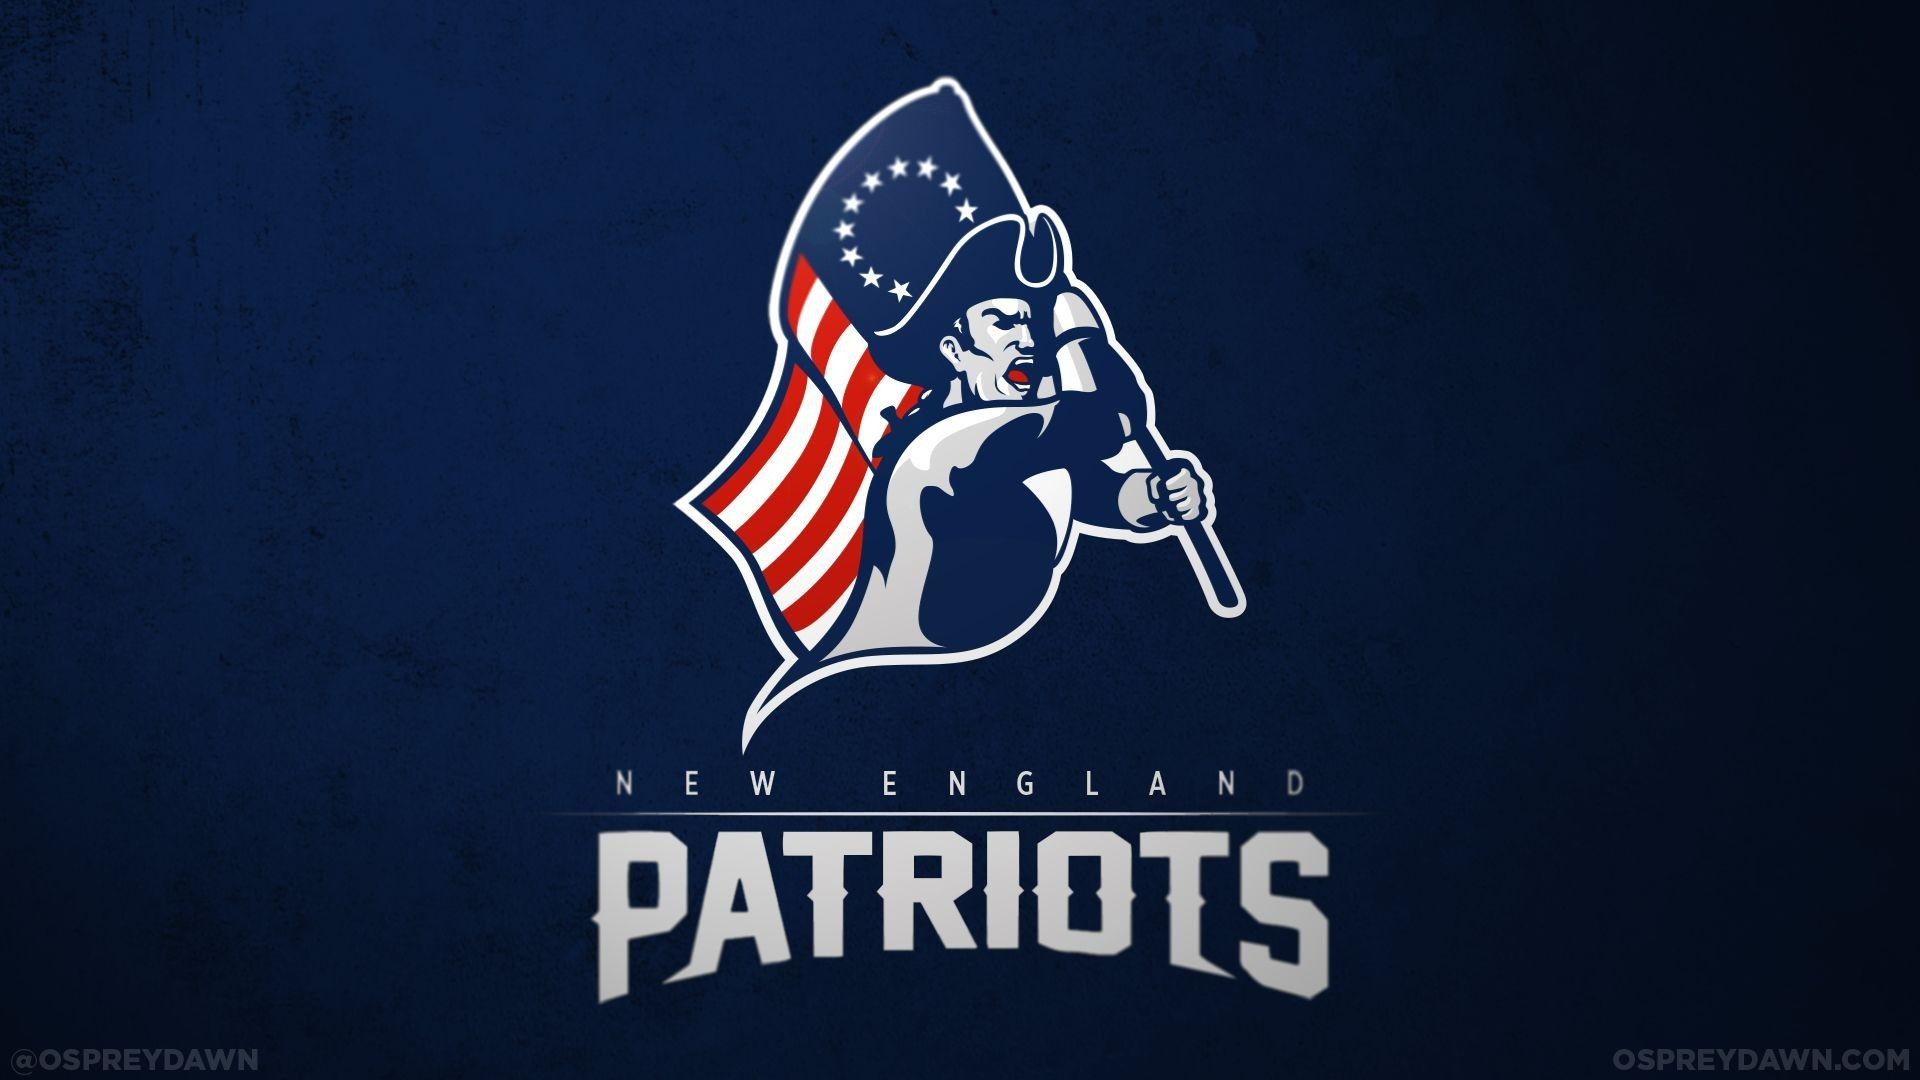 Patriots Wallpaper background picture